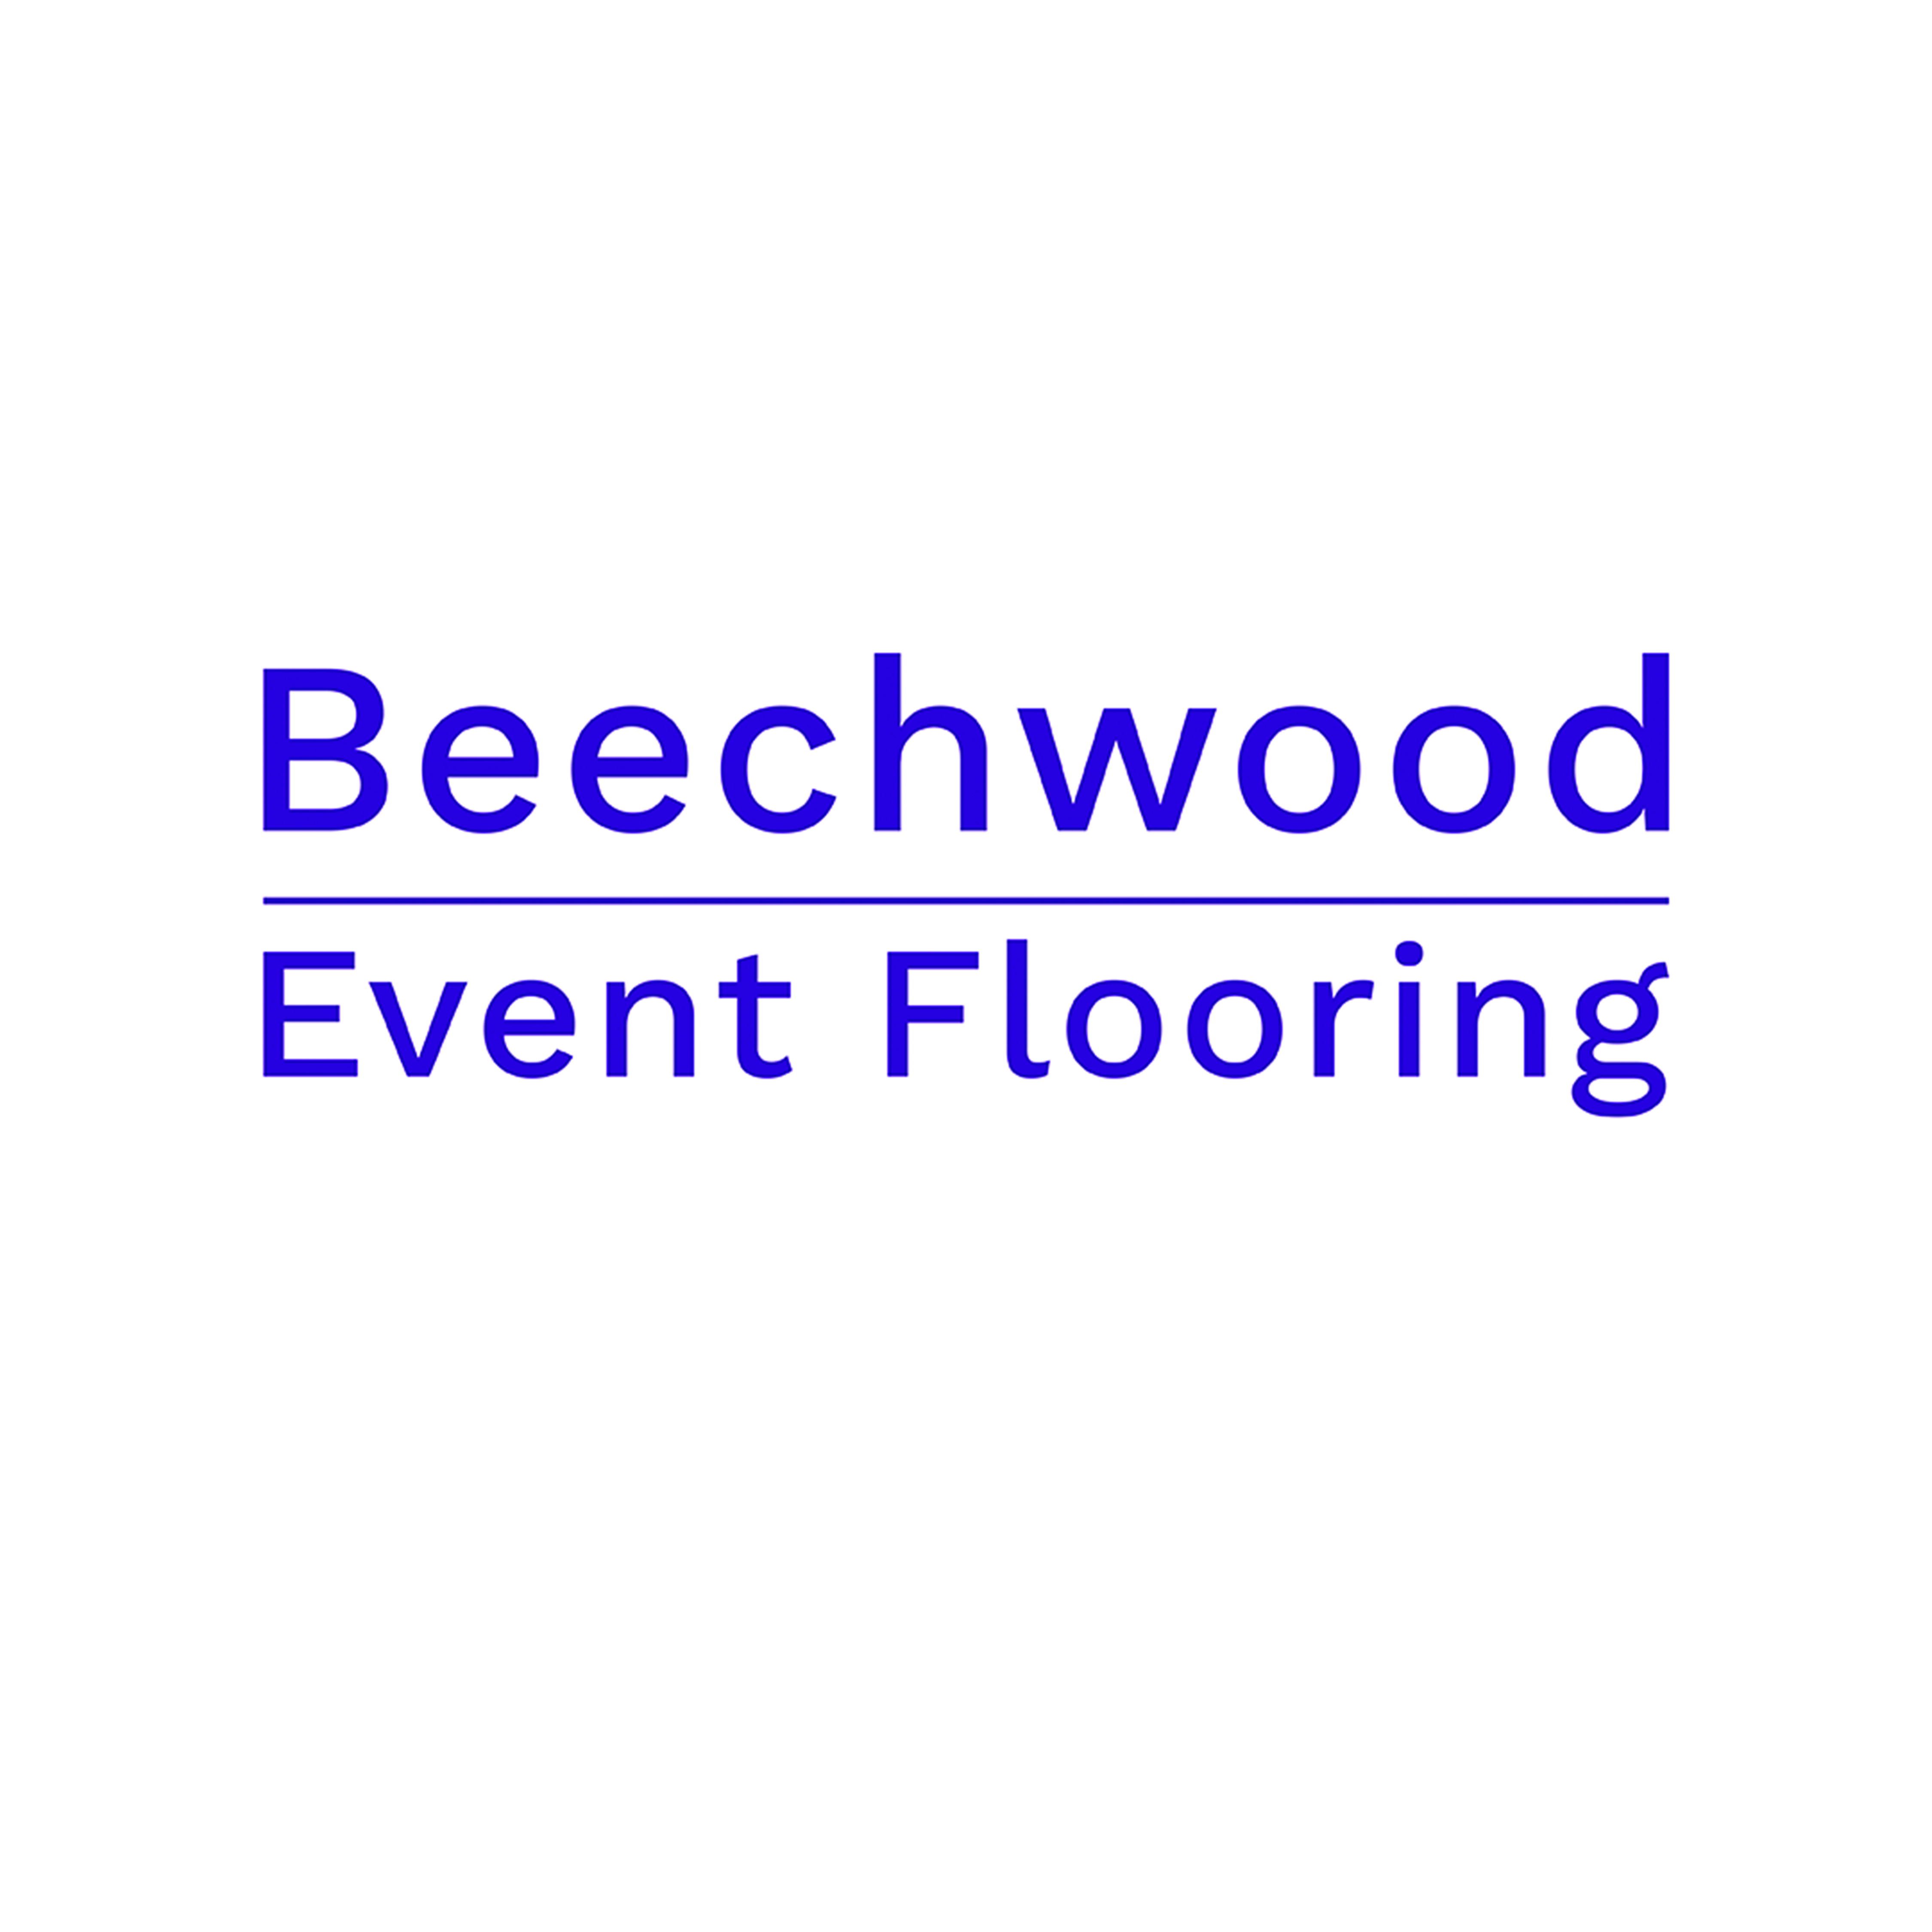 Beechwood Events Flooring Logos White